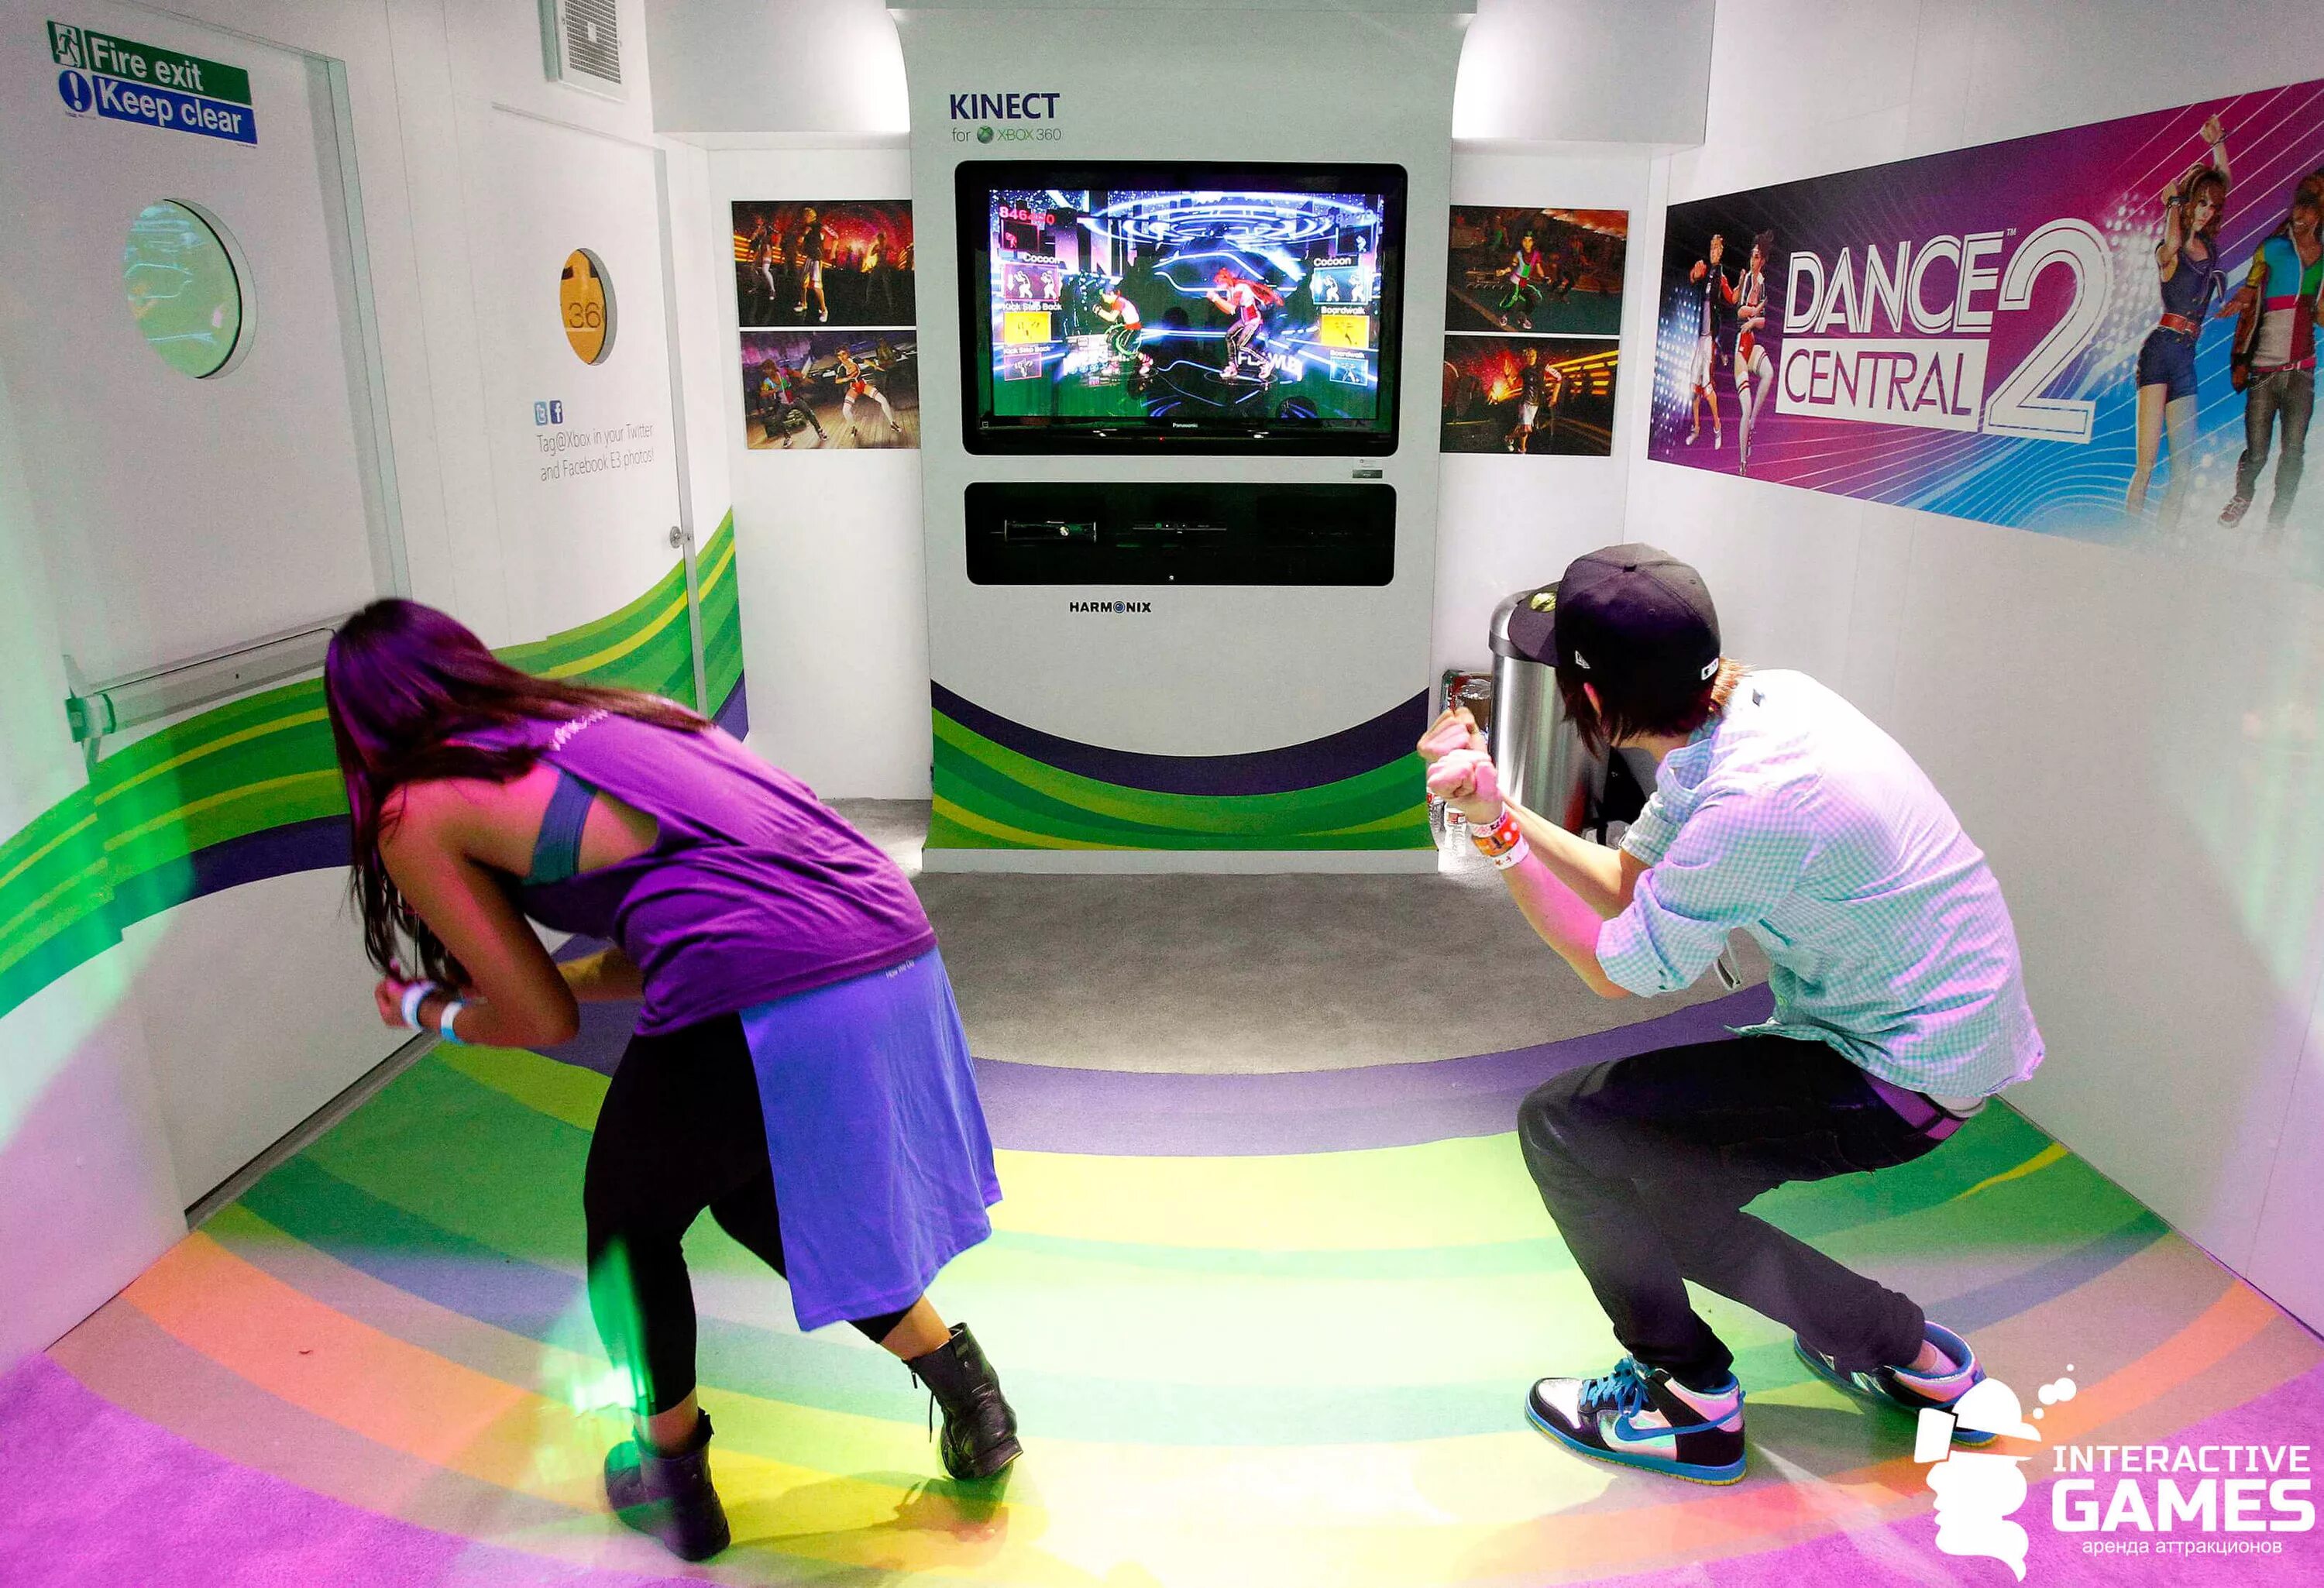 Играть игры через телевизор. Kinect Xbox 360 человек. Xbox 360 Kinect компания. Игровой зал Xbox 360. Xbox 360 Kinect Dance Central.